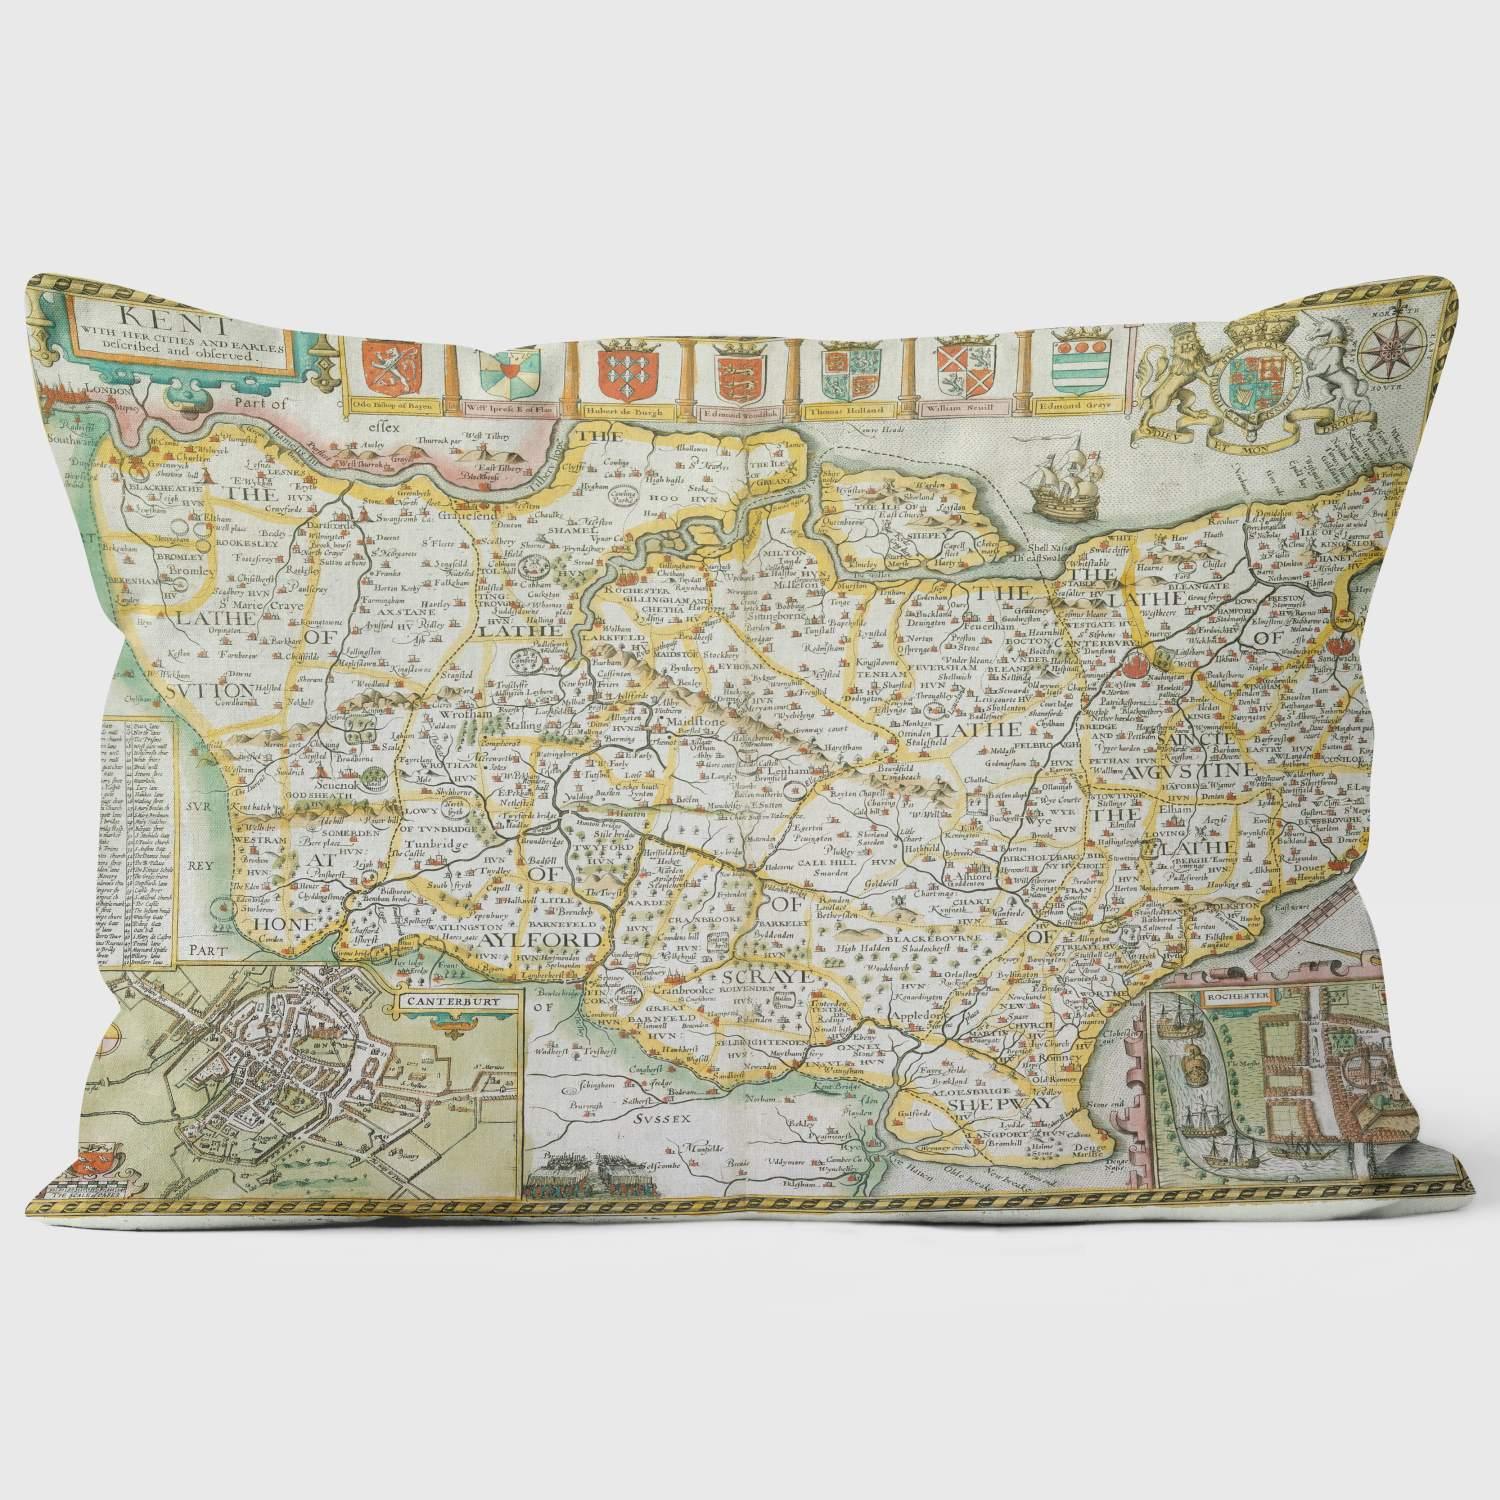 Map of Kent 1616 - British Library Cushions - Handmade Cushions UK - WeLoveCushions